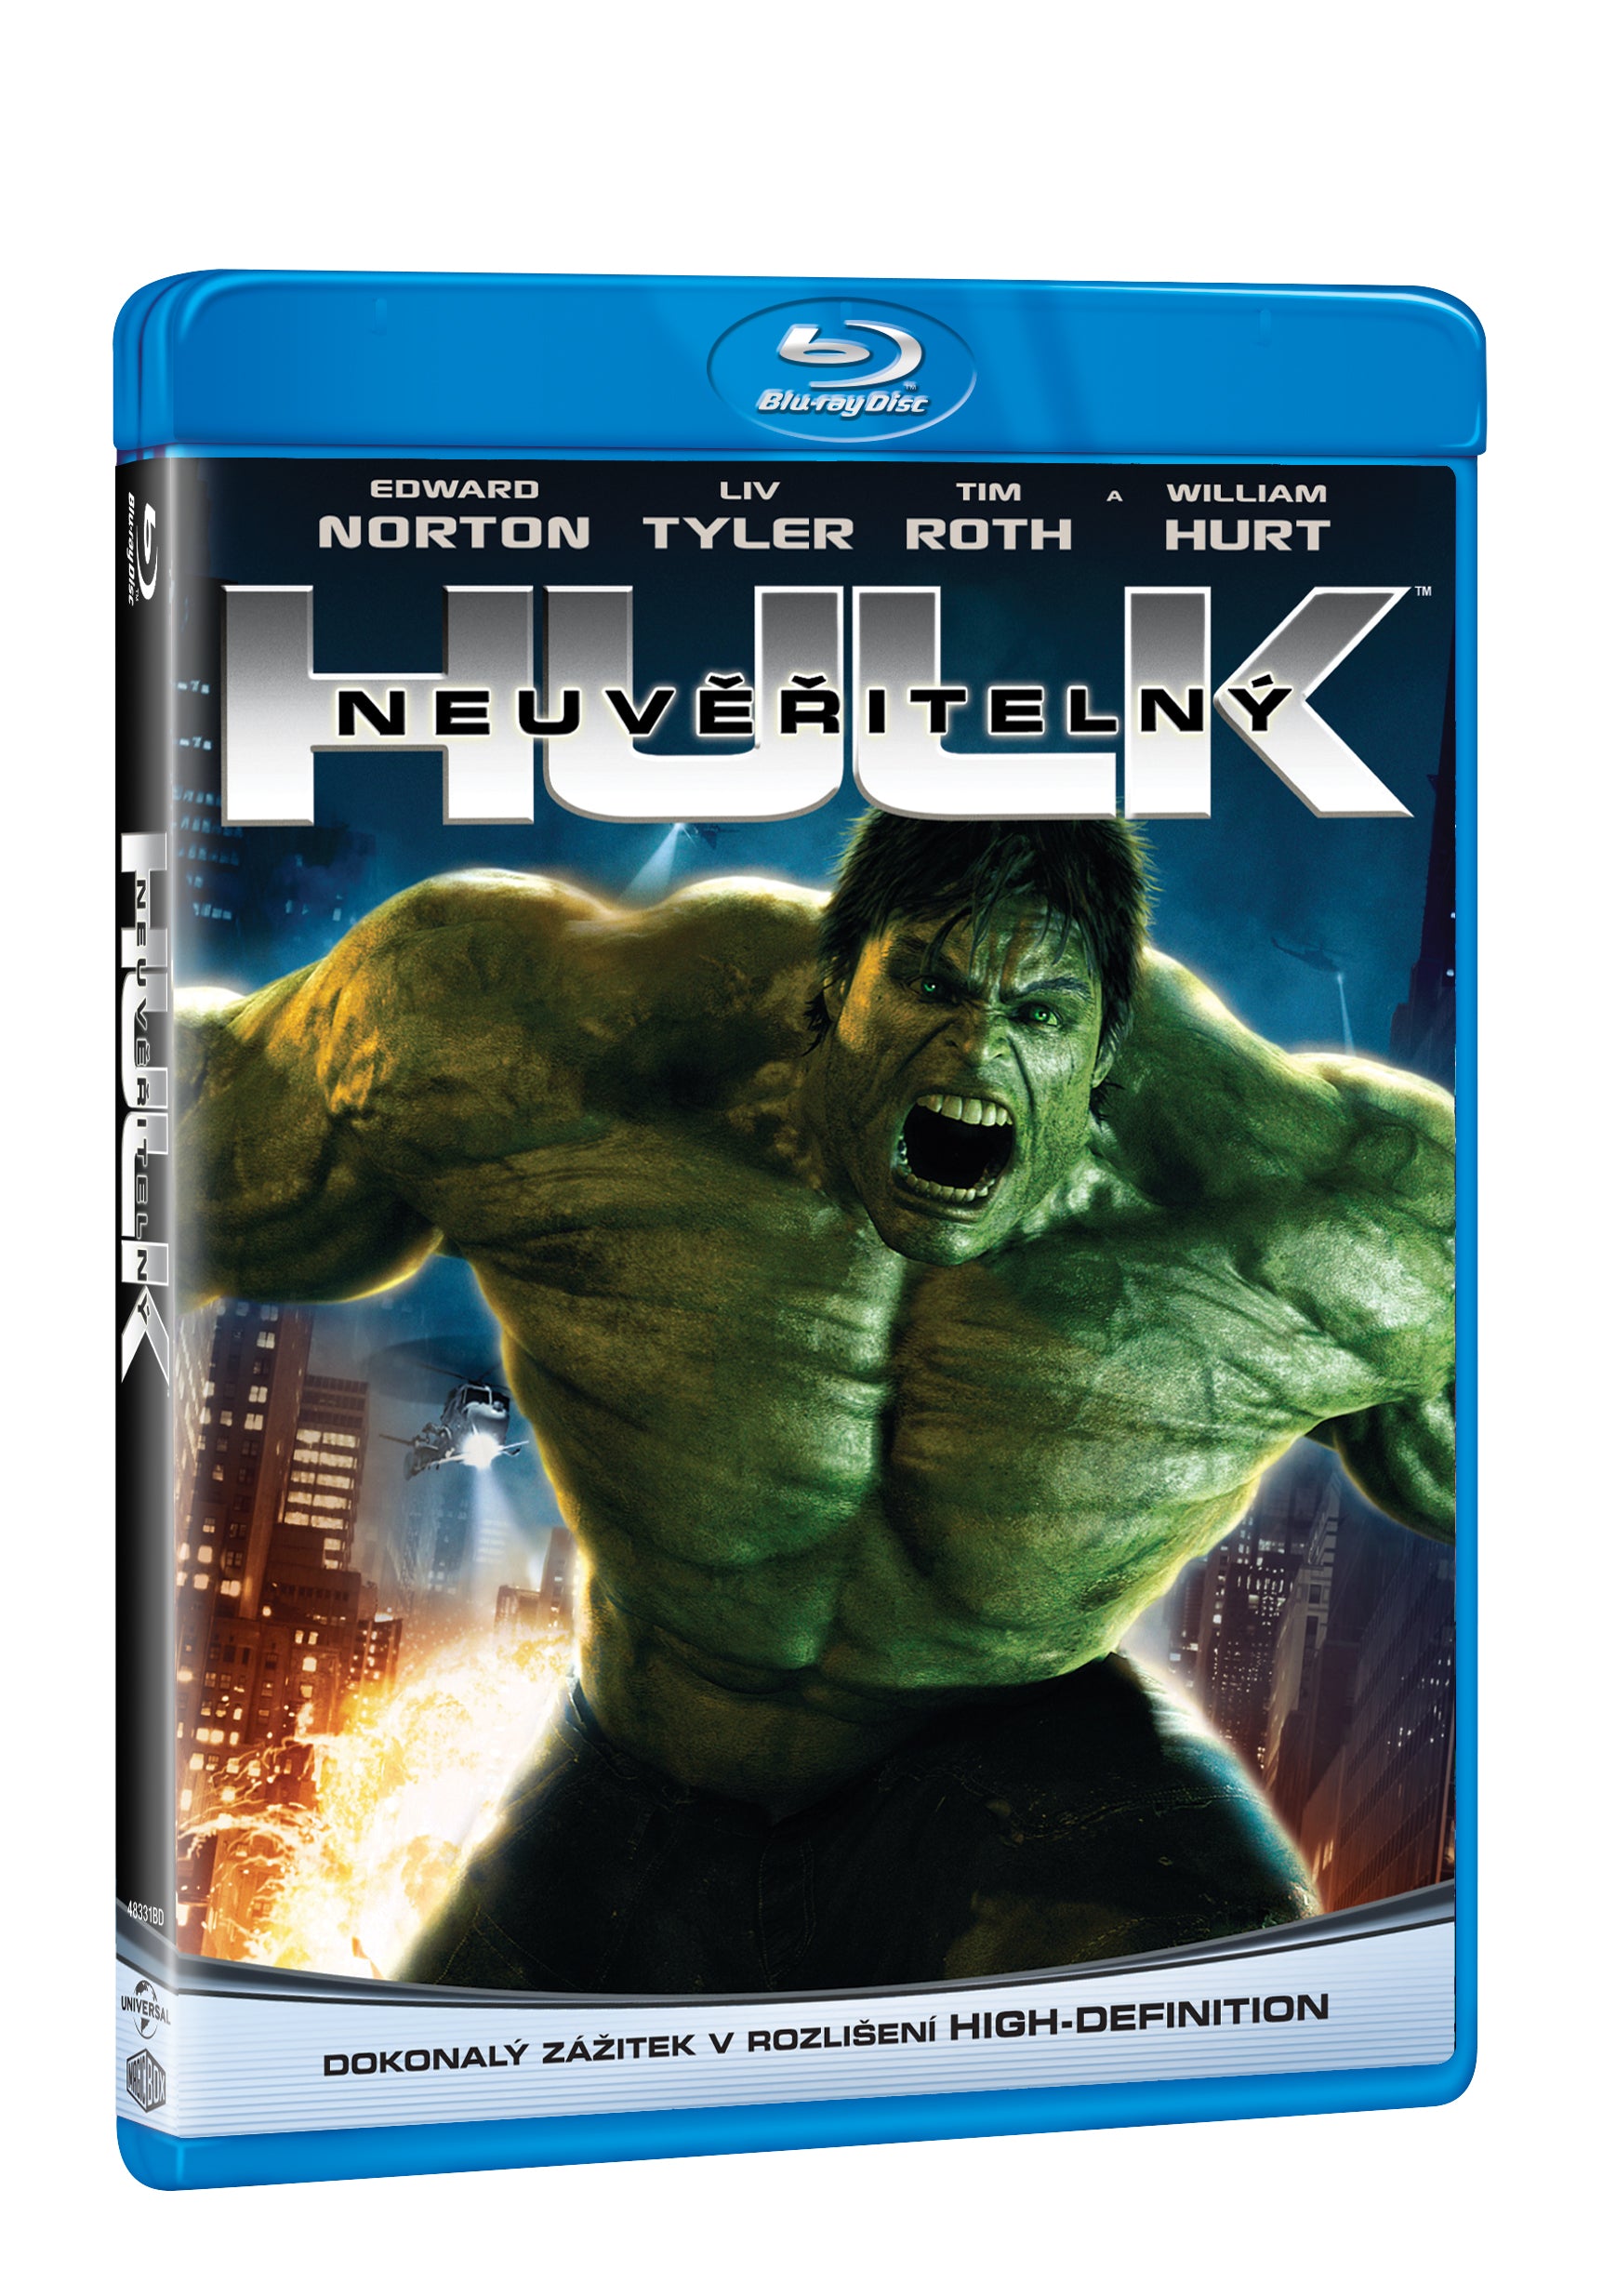 Neuveritelny Hulk BD / The Incredible Hulk - Czech version